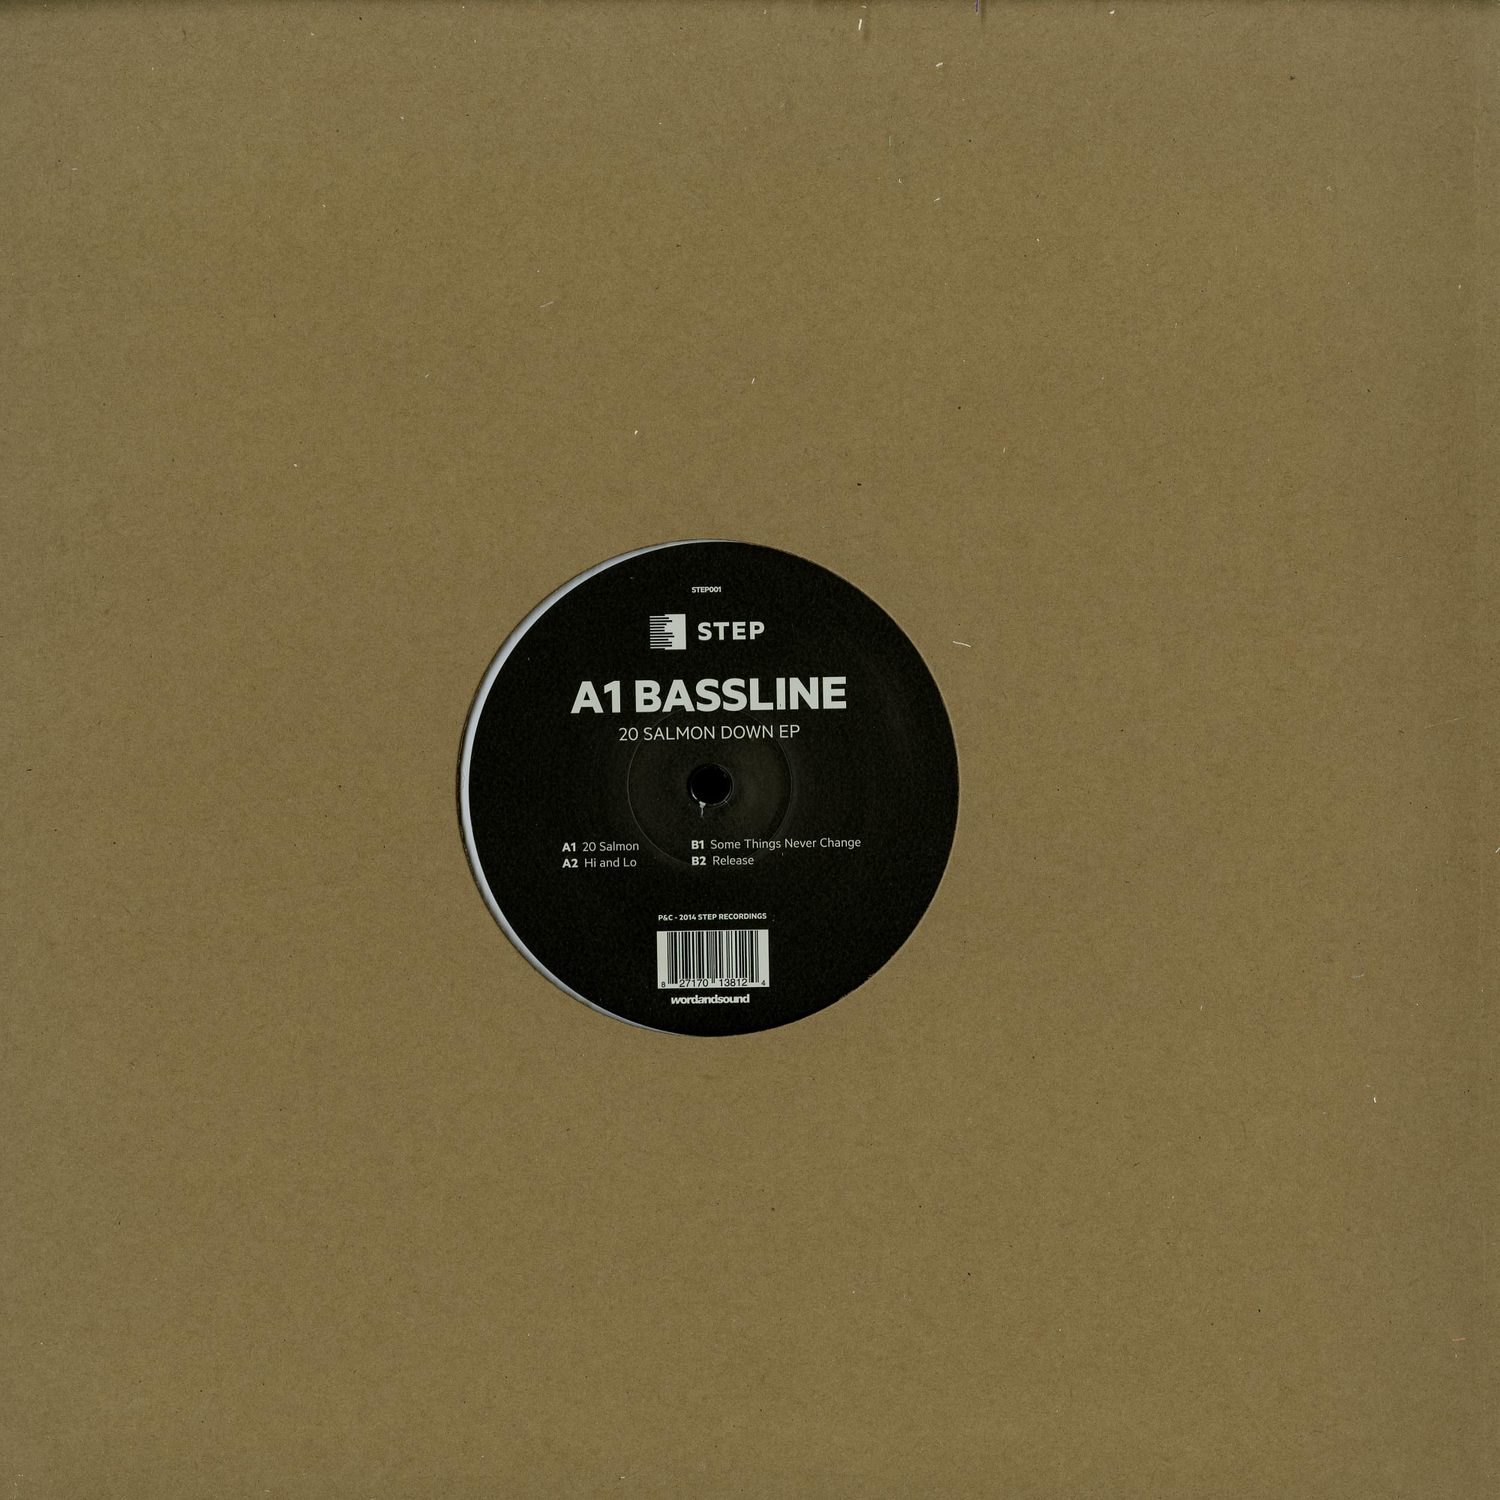 A1 Bassline - 20 SALMONS DOWN EP